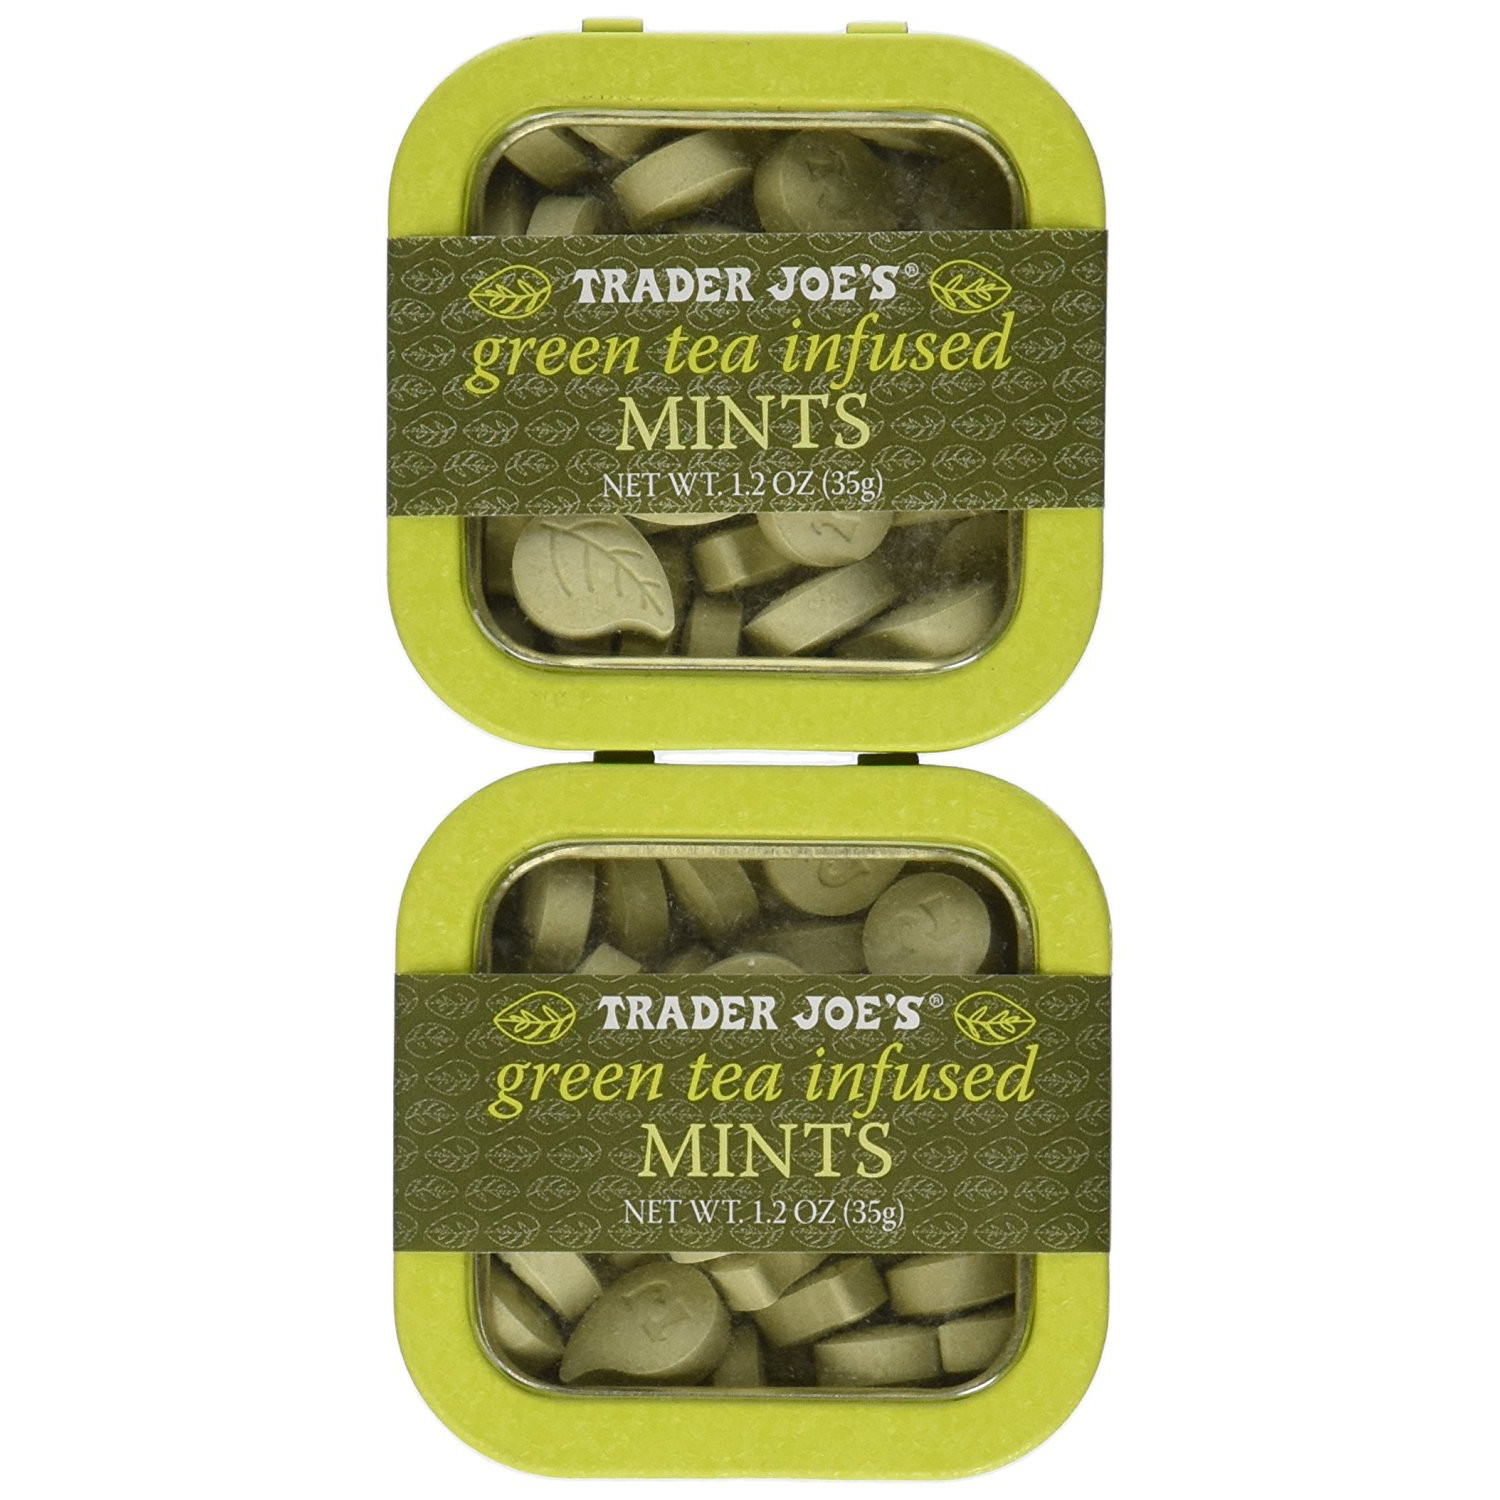 trader joe's tea trader joes green tea mints LUUUX Trader joes